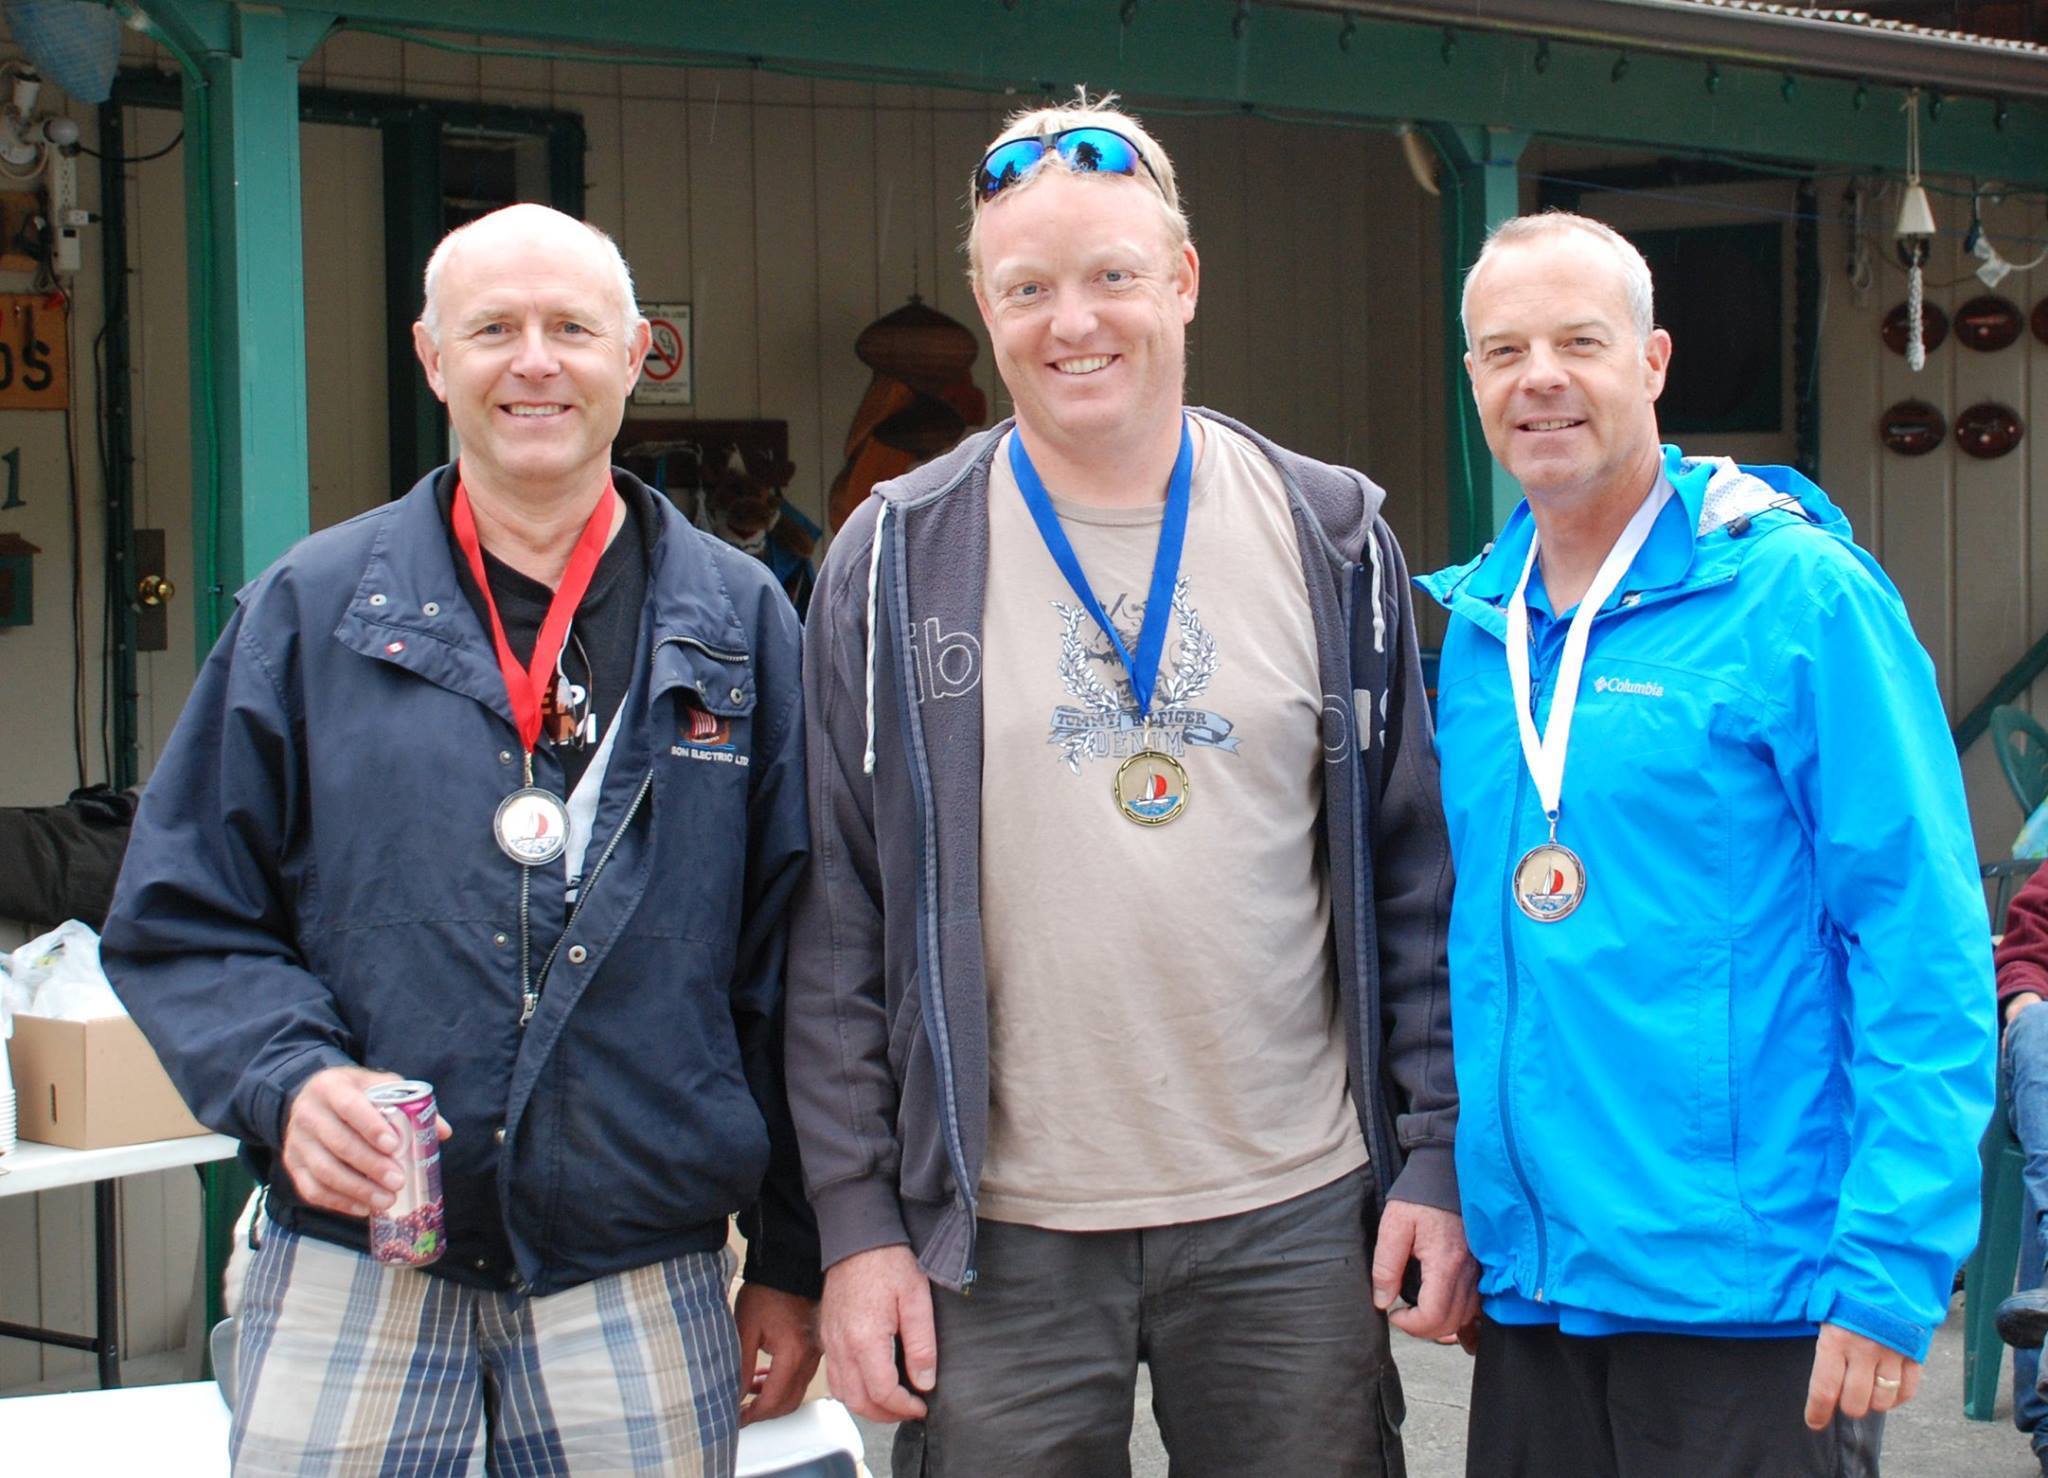 Winners of this years Poise Cove Regatta. 1st Richard Starling, 2nd Dennis Olson, 3rd Brian Fournier.